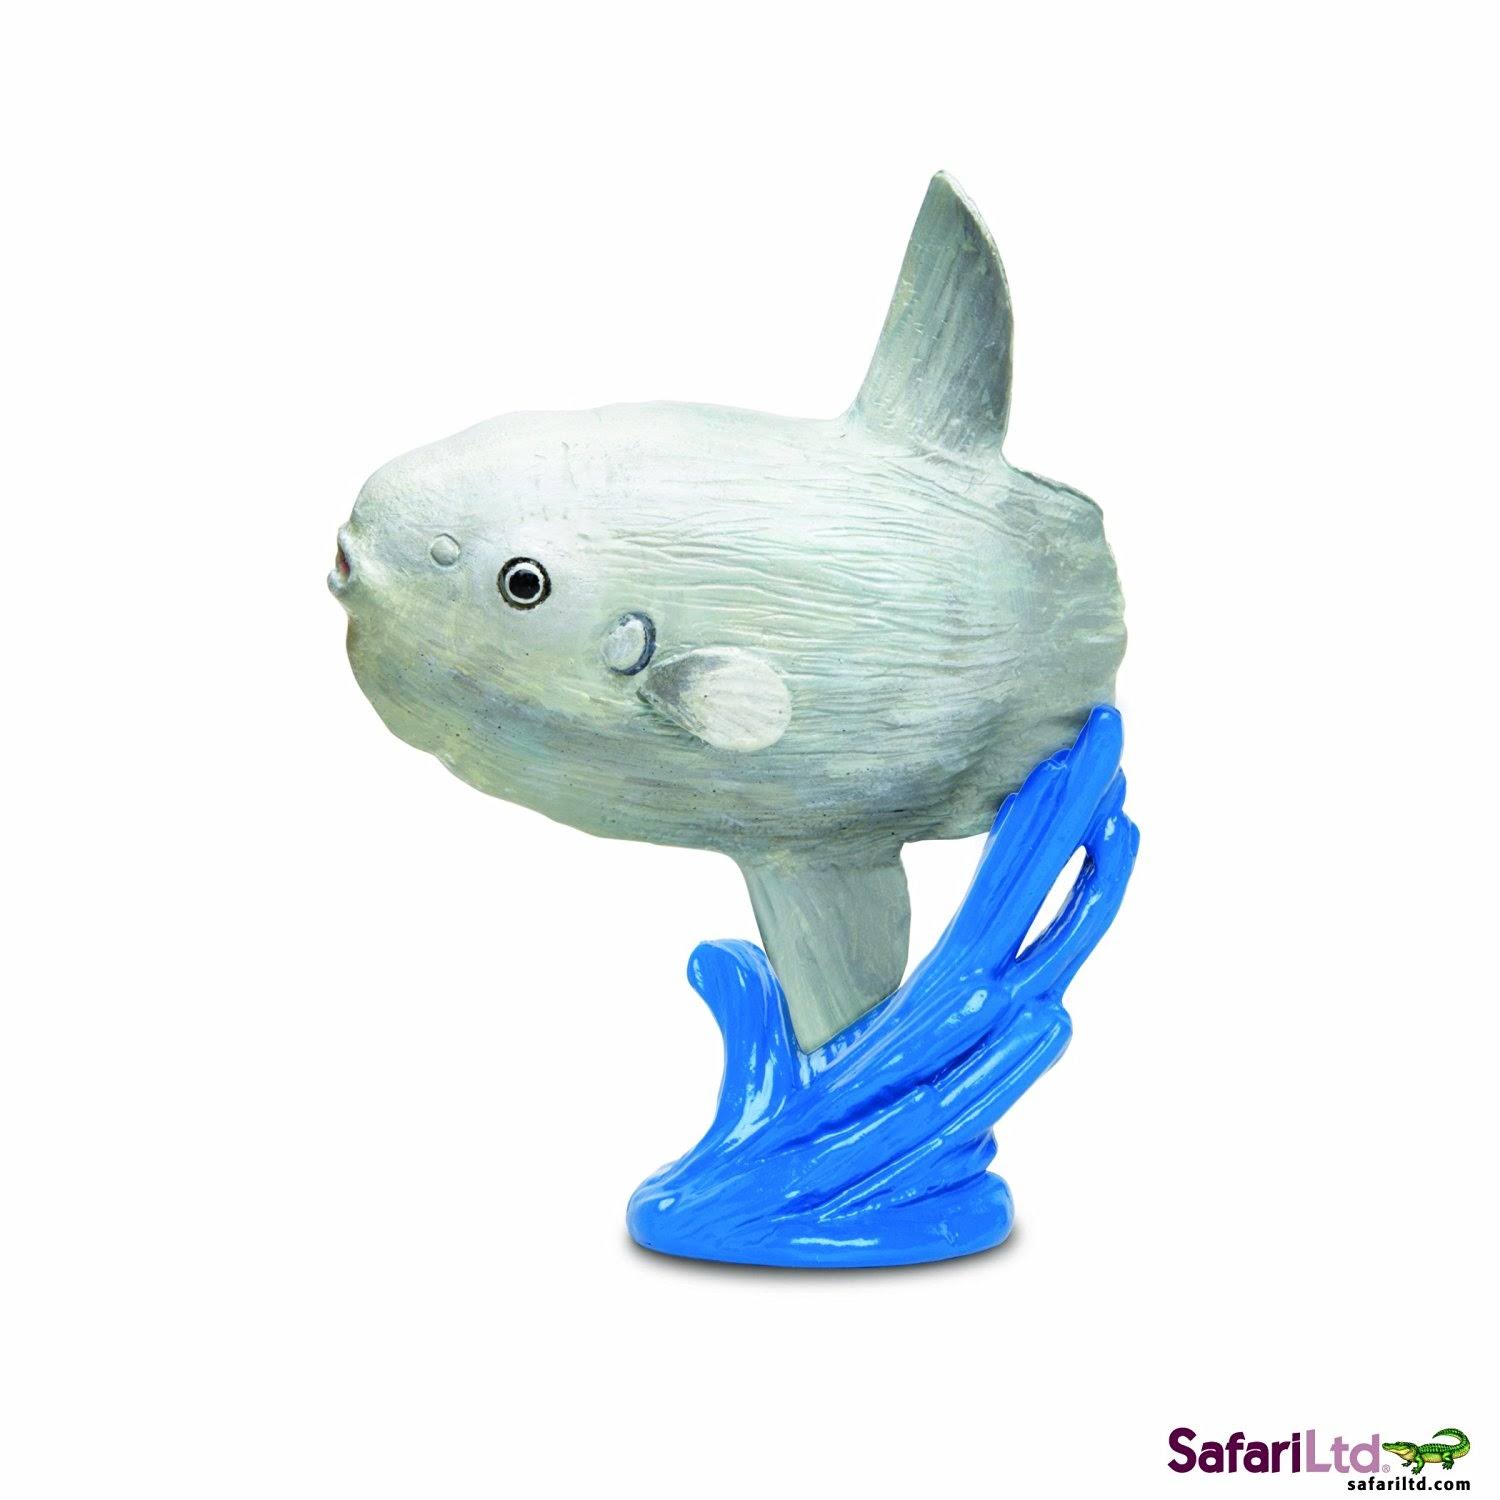 Safari S200529 Sea Life Sunfish with Stand Miniature